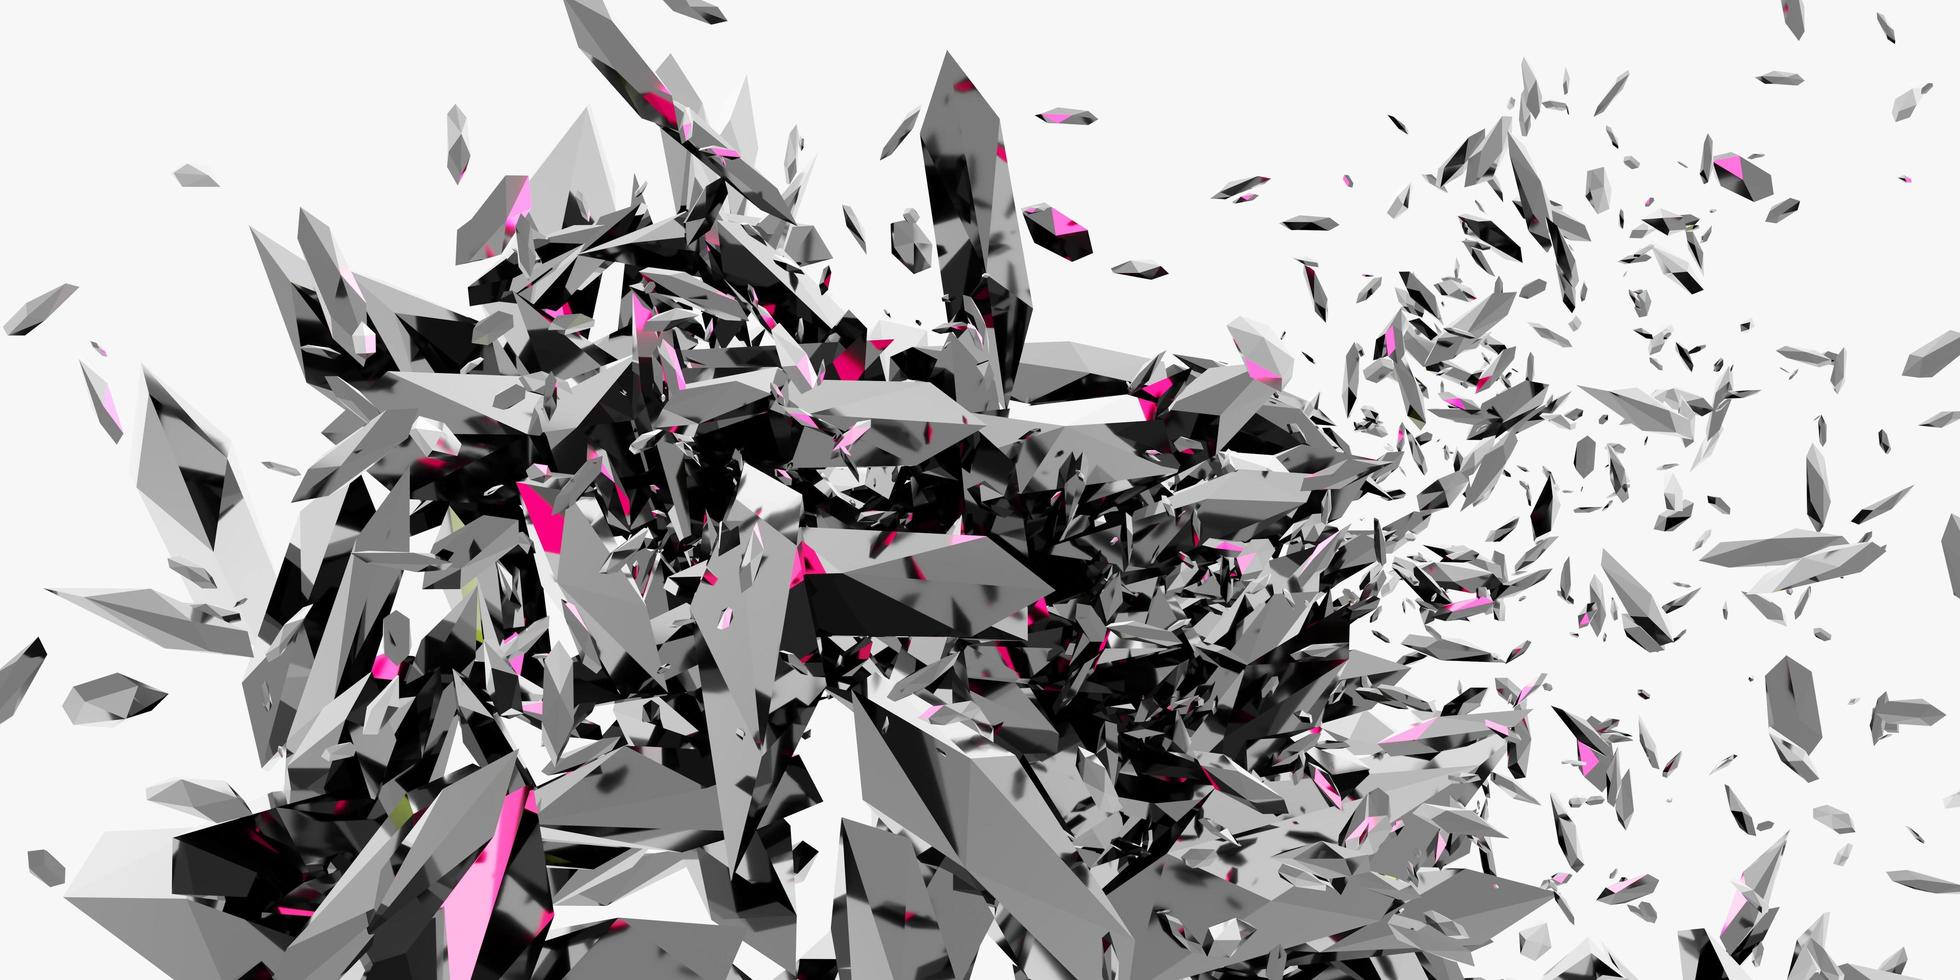 Explosion fragments debris dust elements broken glass scattered scattered white background 3d illustration photo